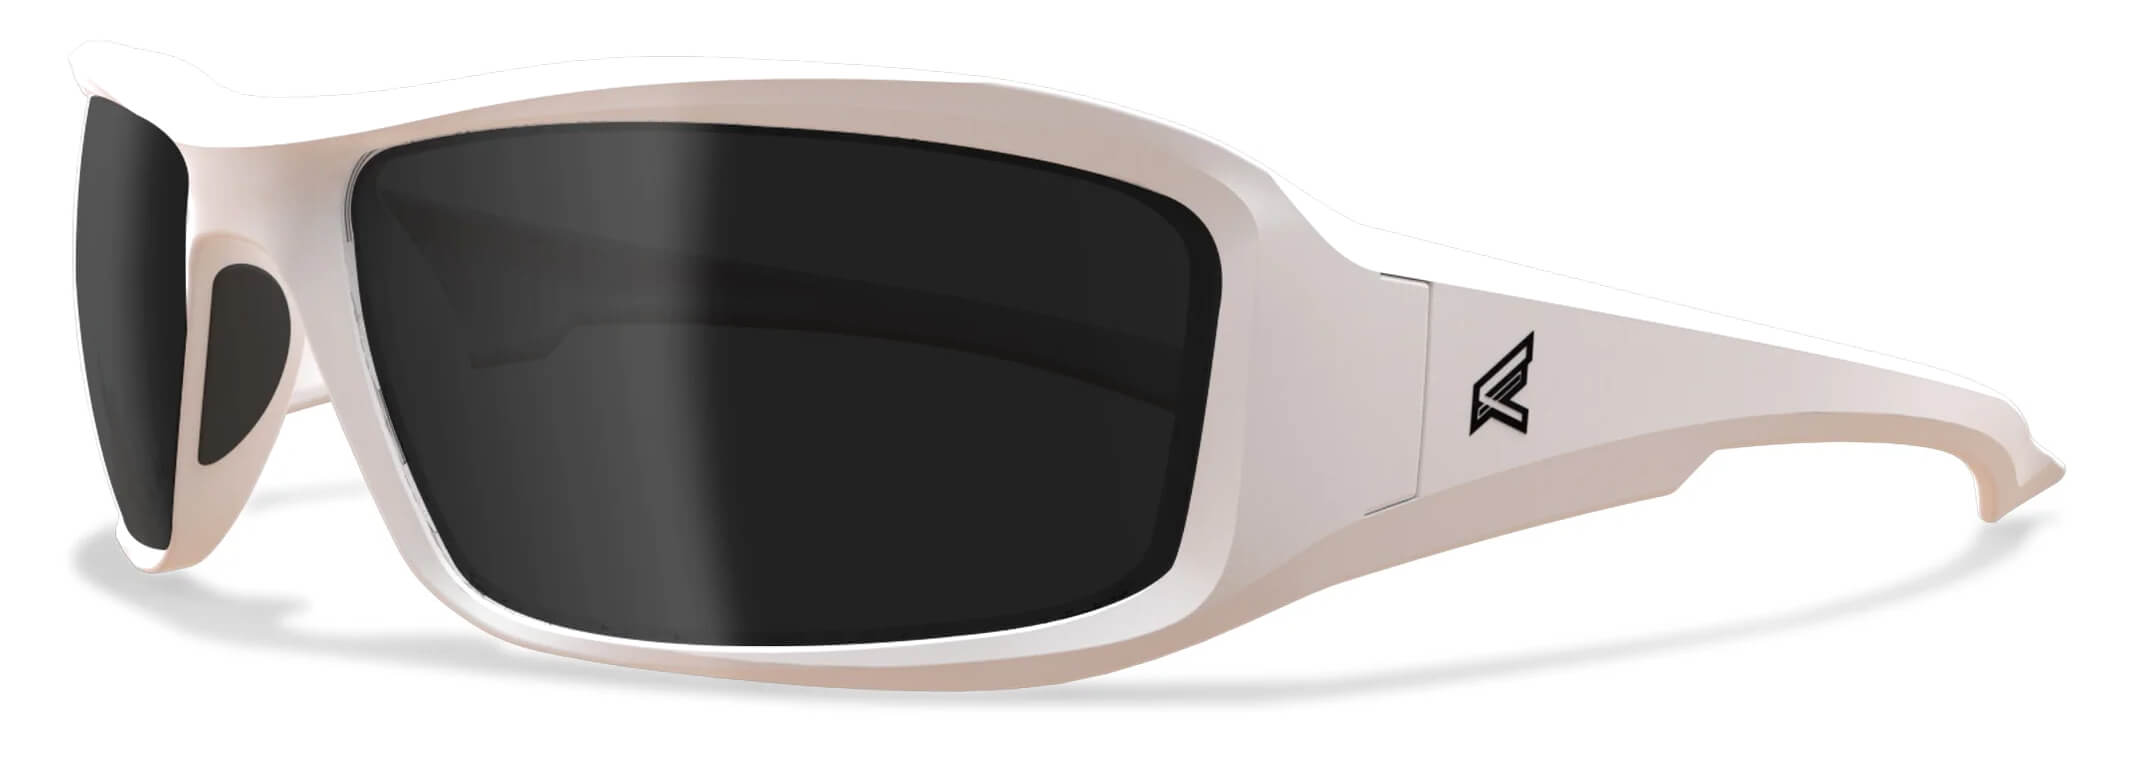 Edge Brazeau Designer Series with White Frame and Smoke Lens